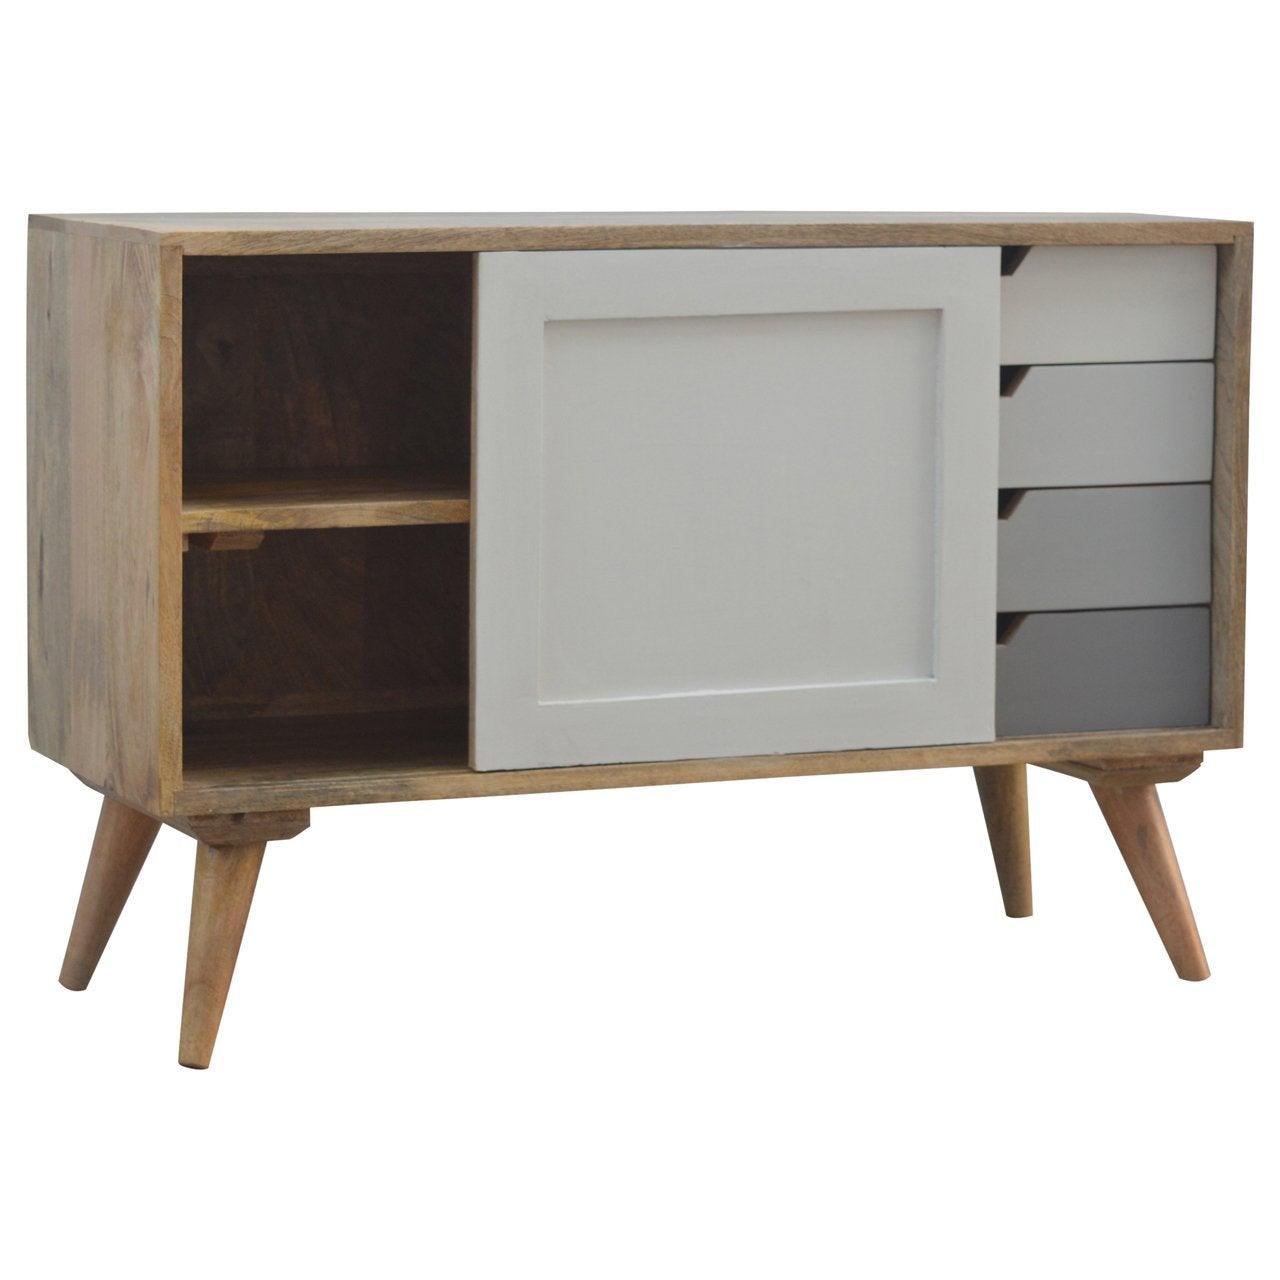 Nordic sliding cabinet with 4 drawers - crimblefest furniture - image 5